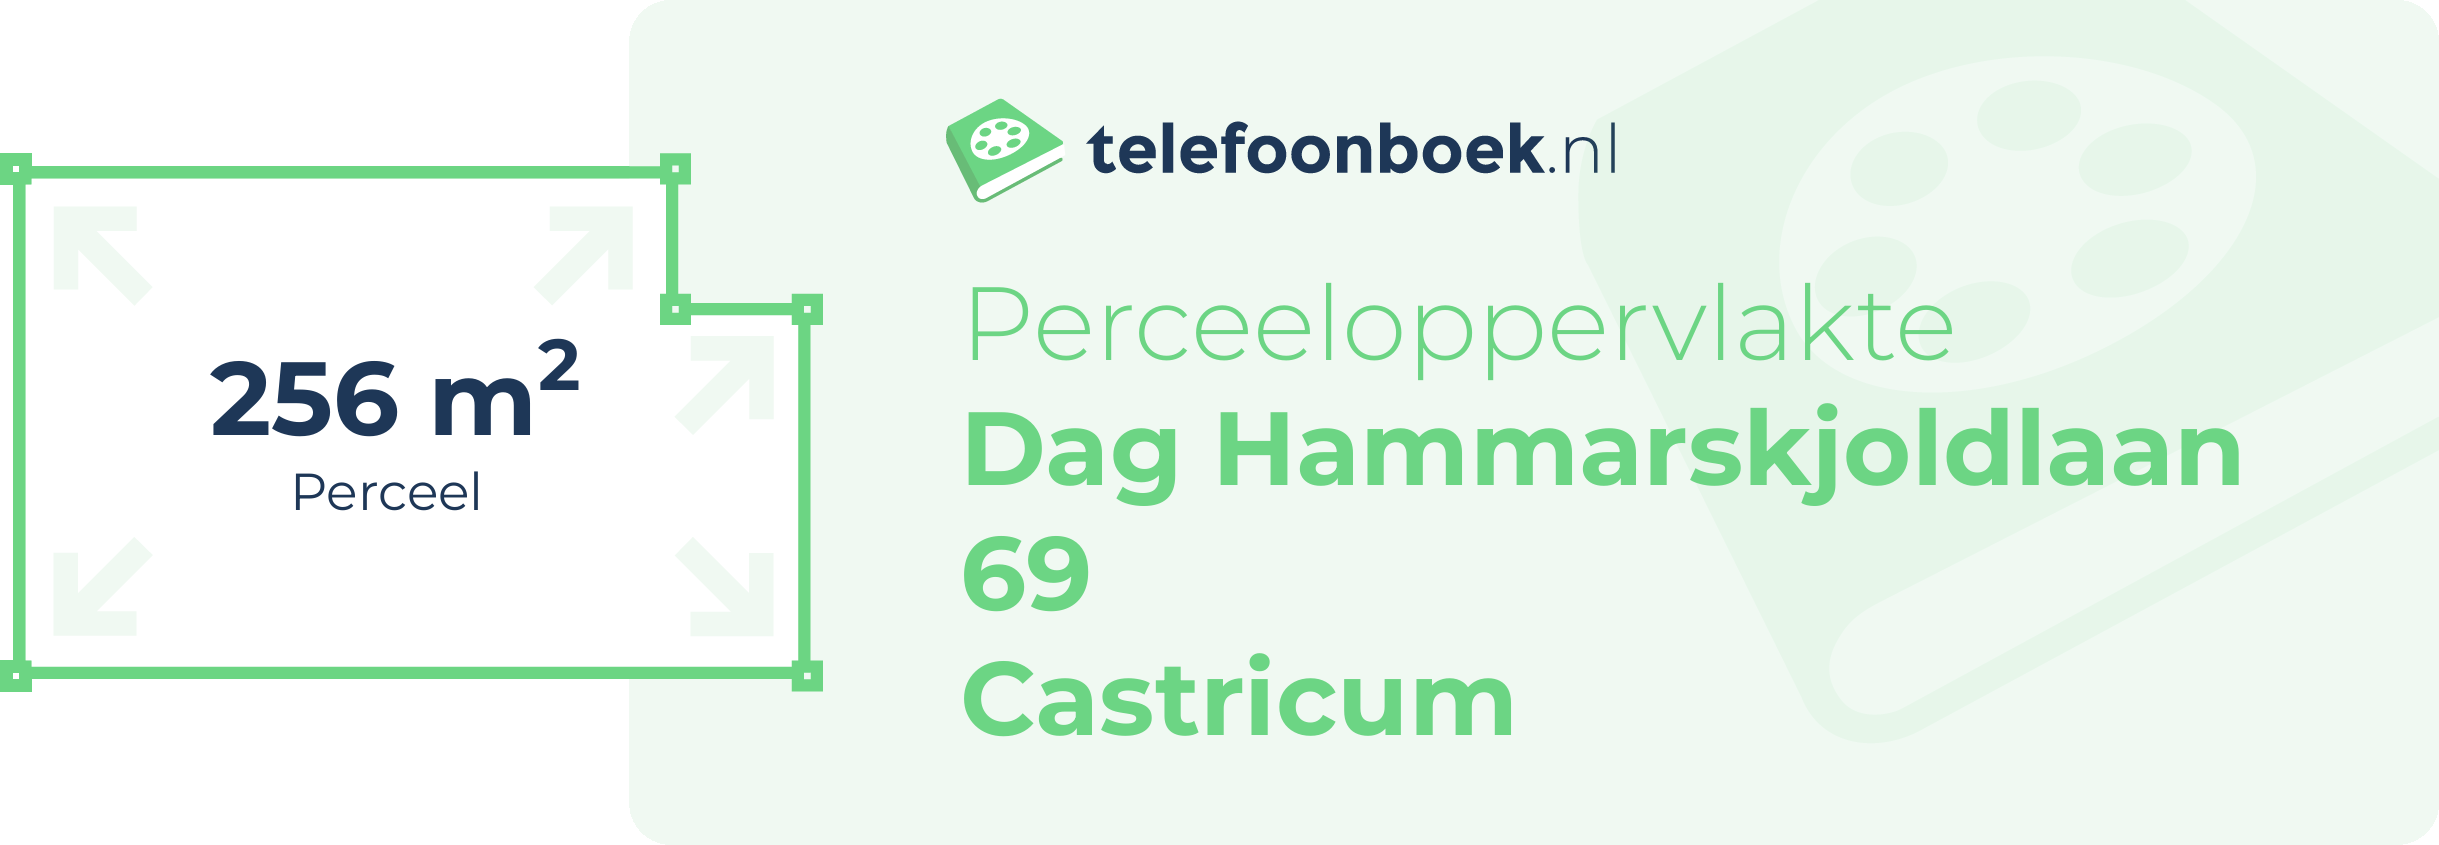 Perceeloppervlakte Dag Hammarskjoldlaan 69 Castricum